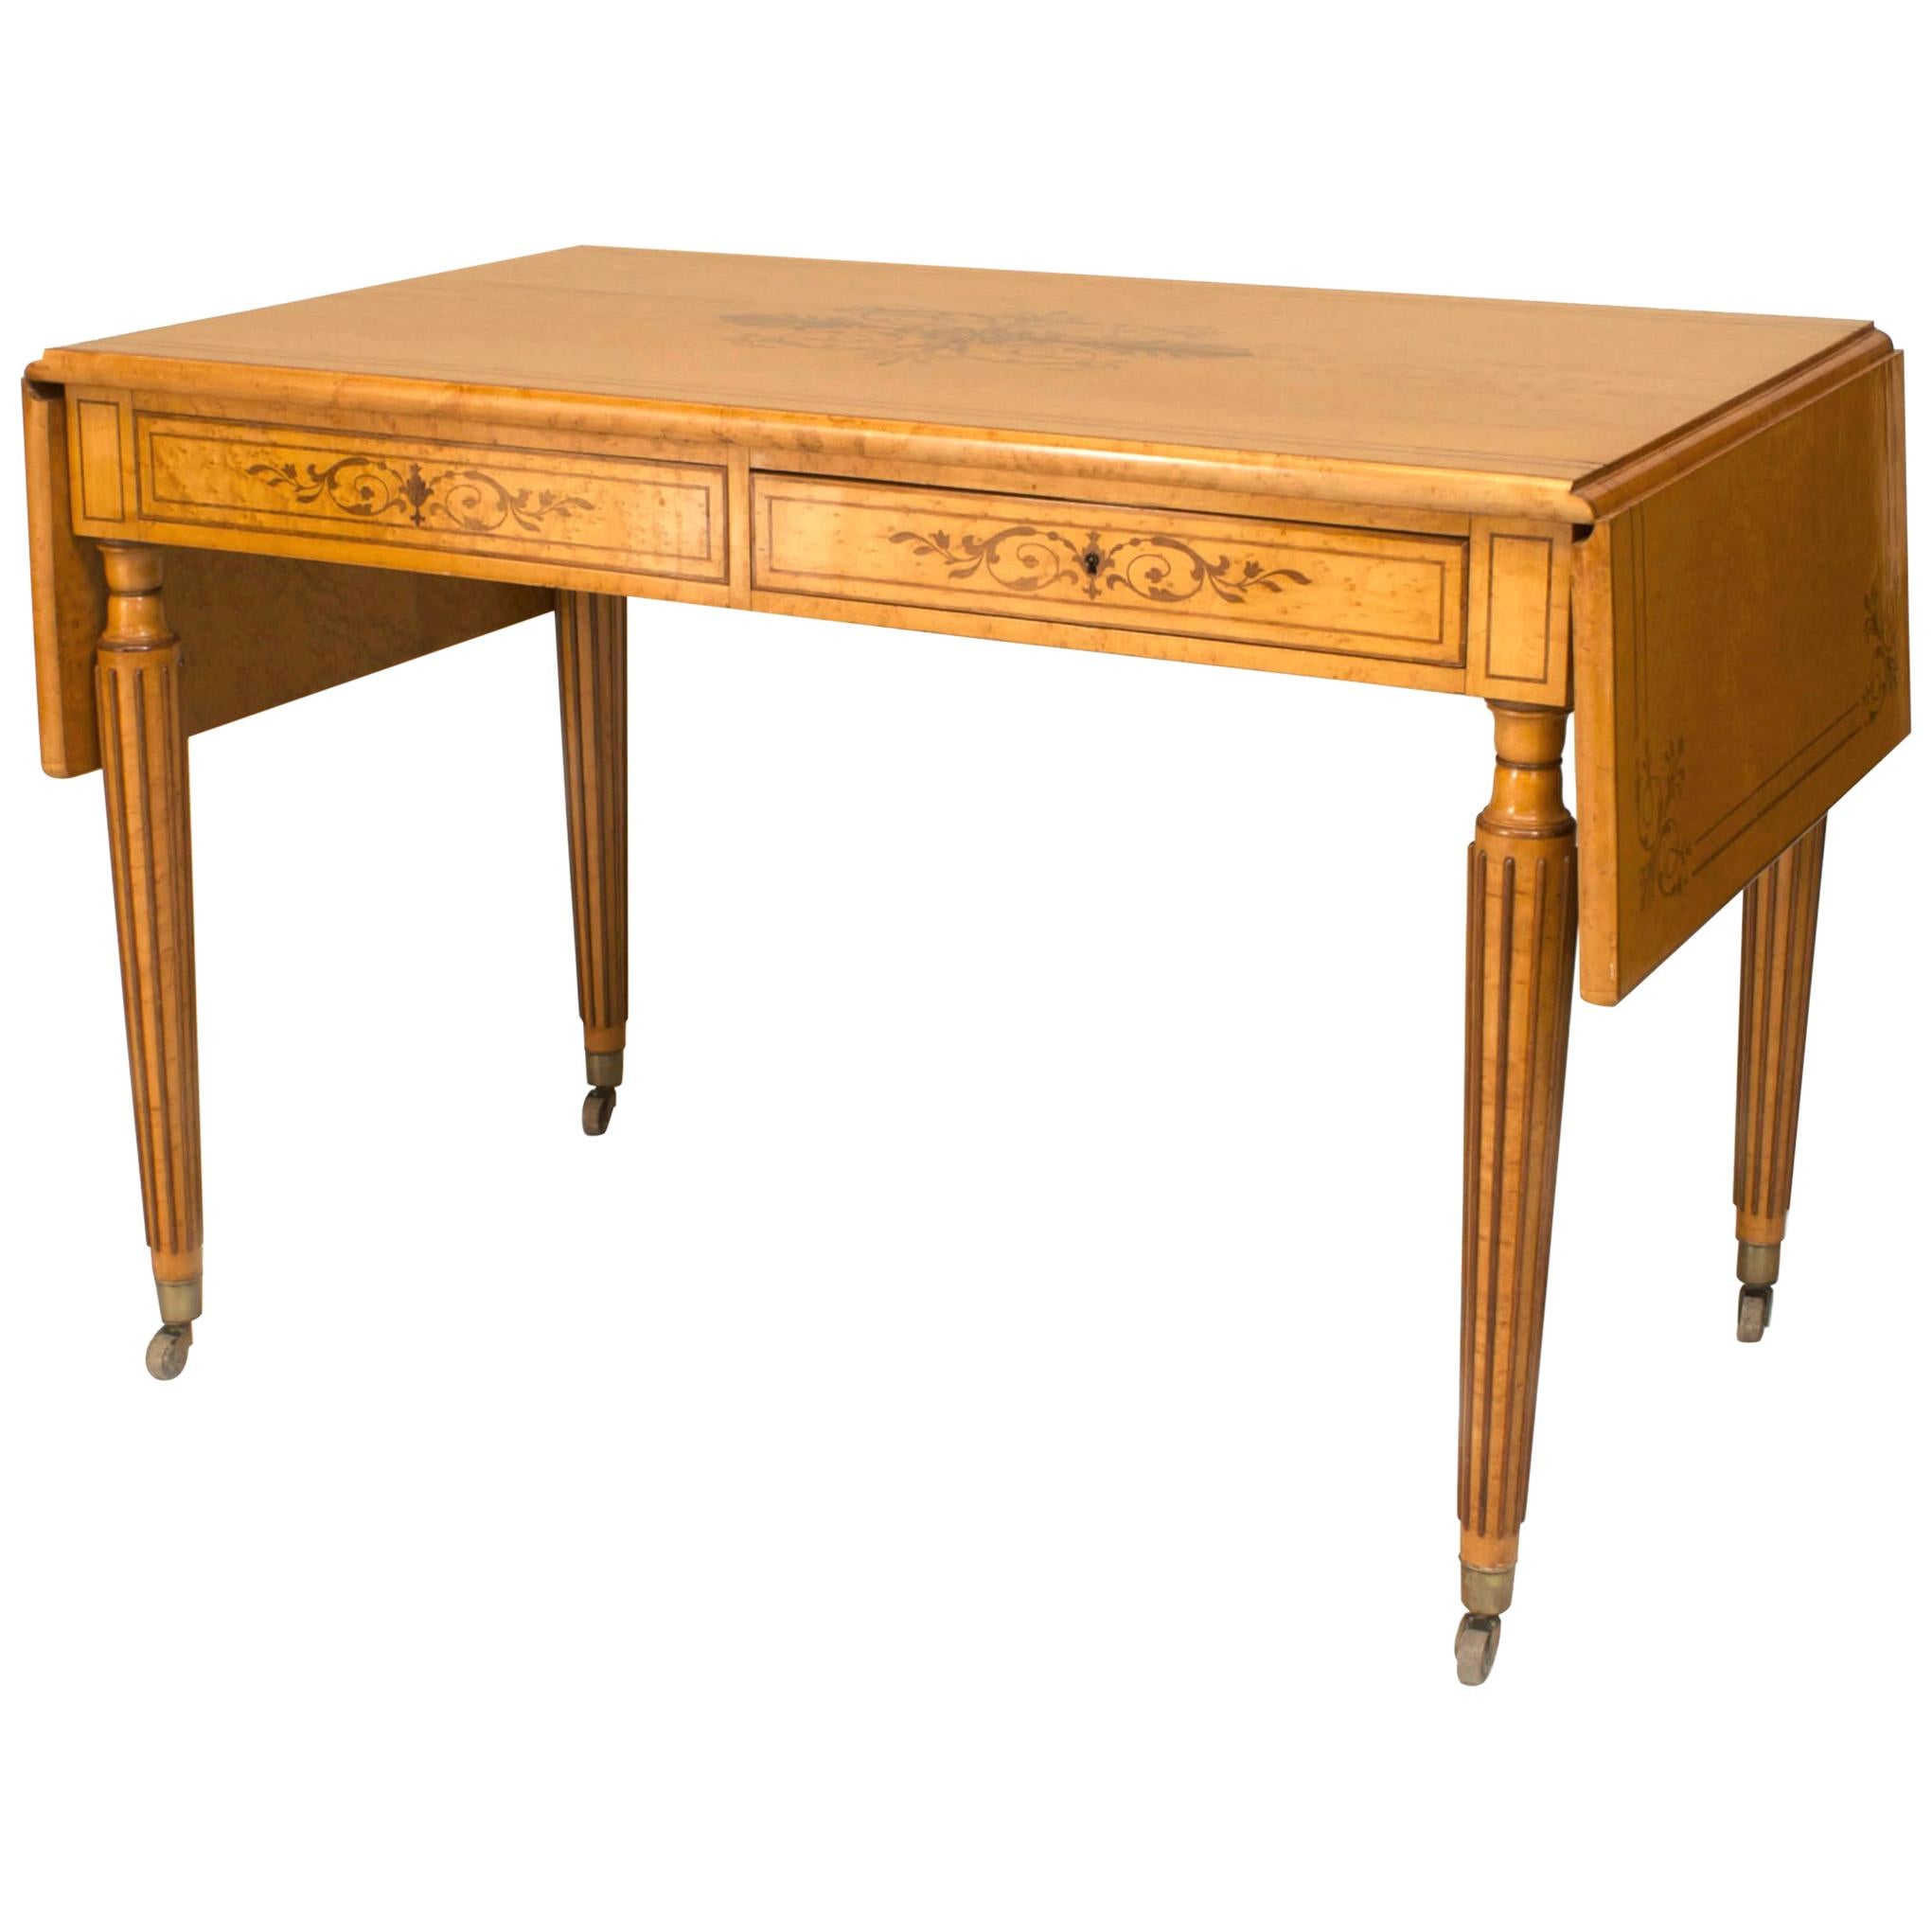 French Charles X Birdseye Davenport Table Desk